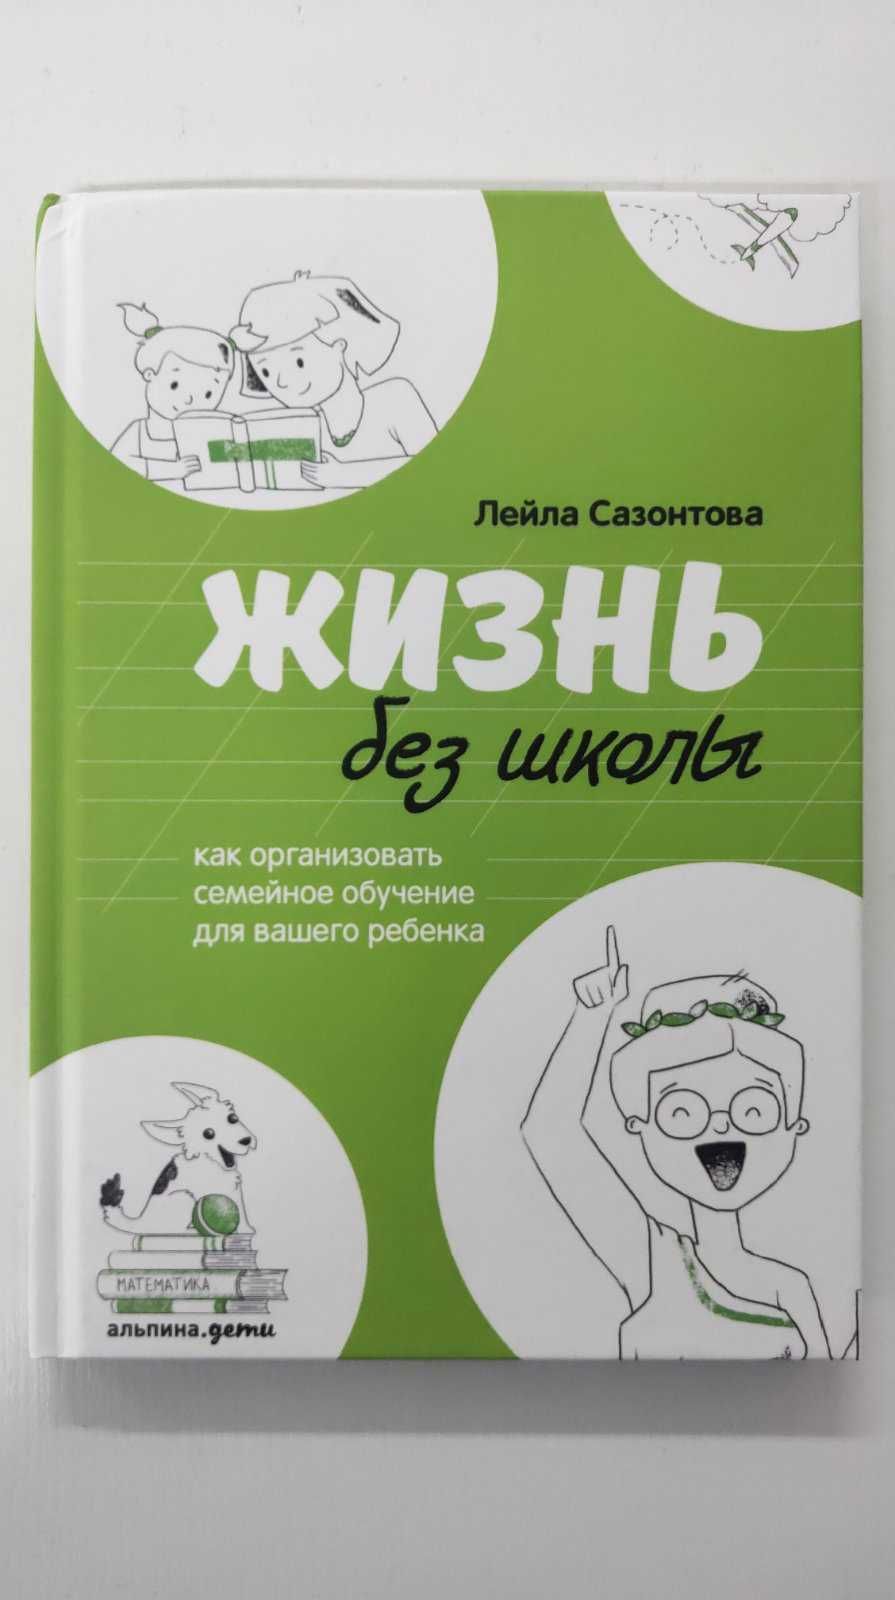 Продається нова книга Л. Сазонтова "Жизнь без школы"